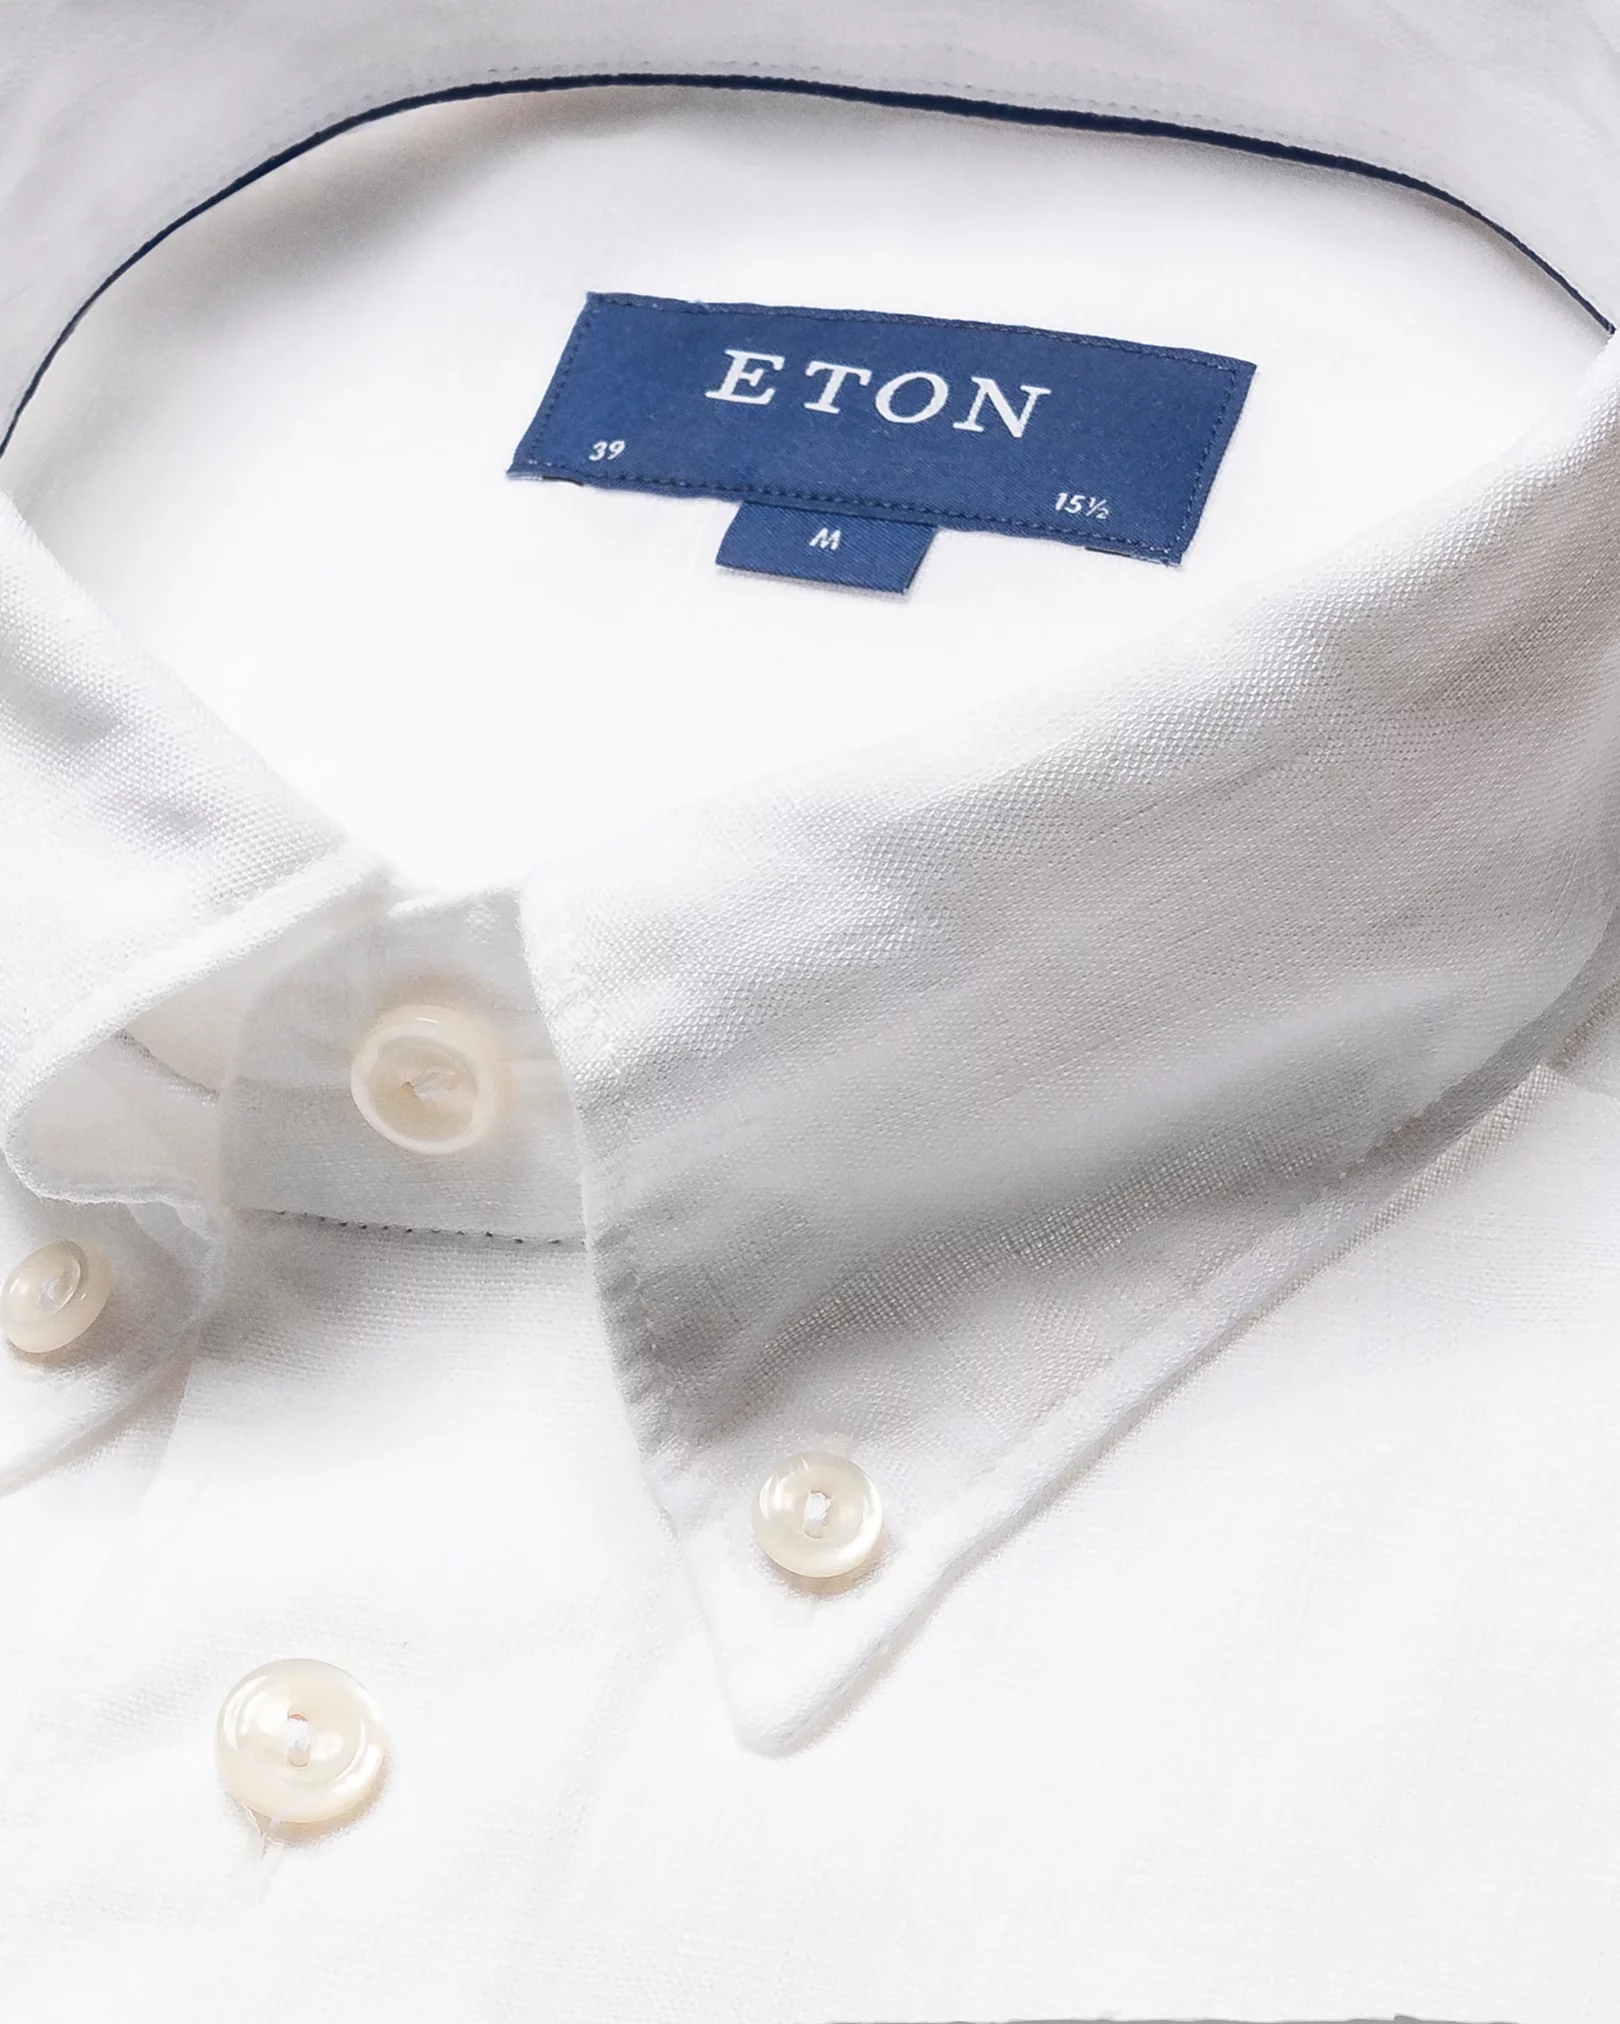 White Linen Shirt - Button Down